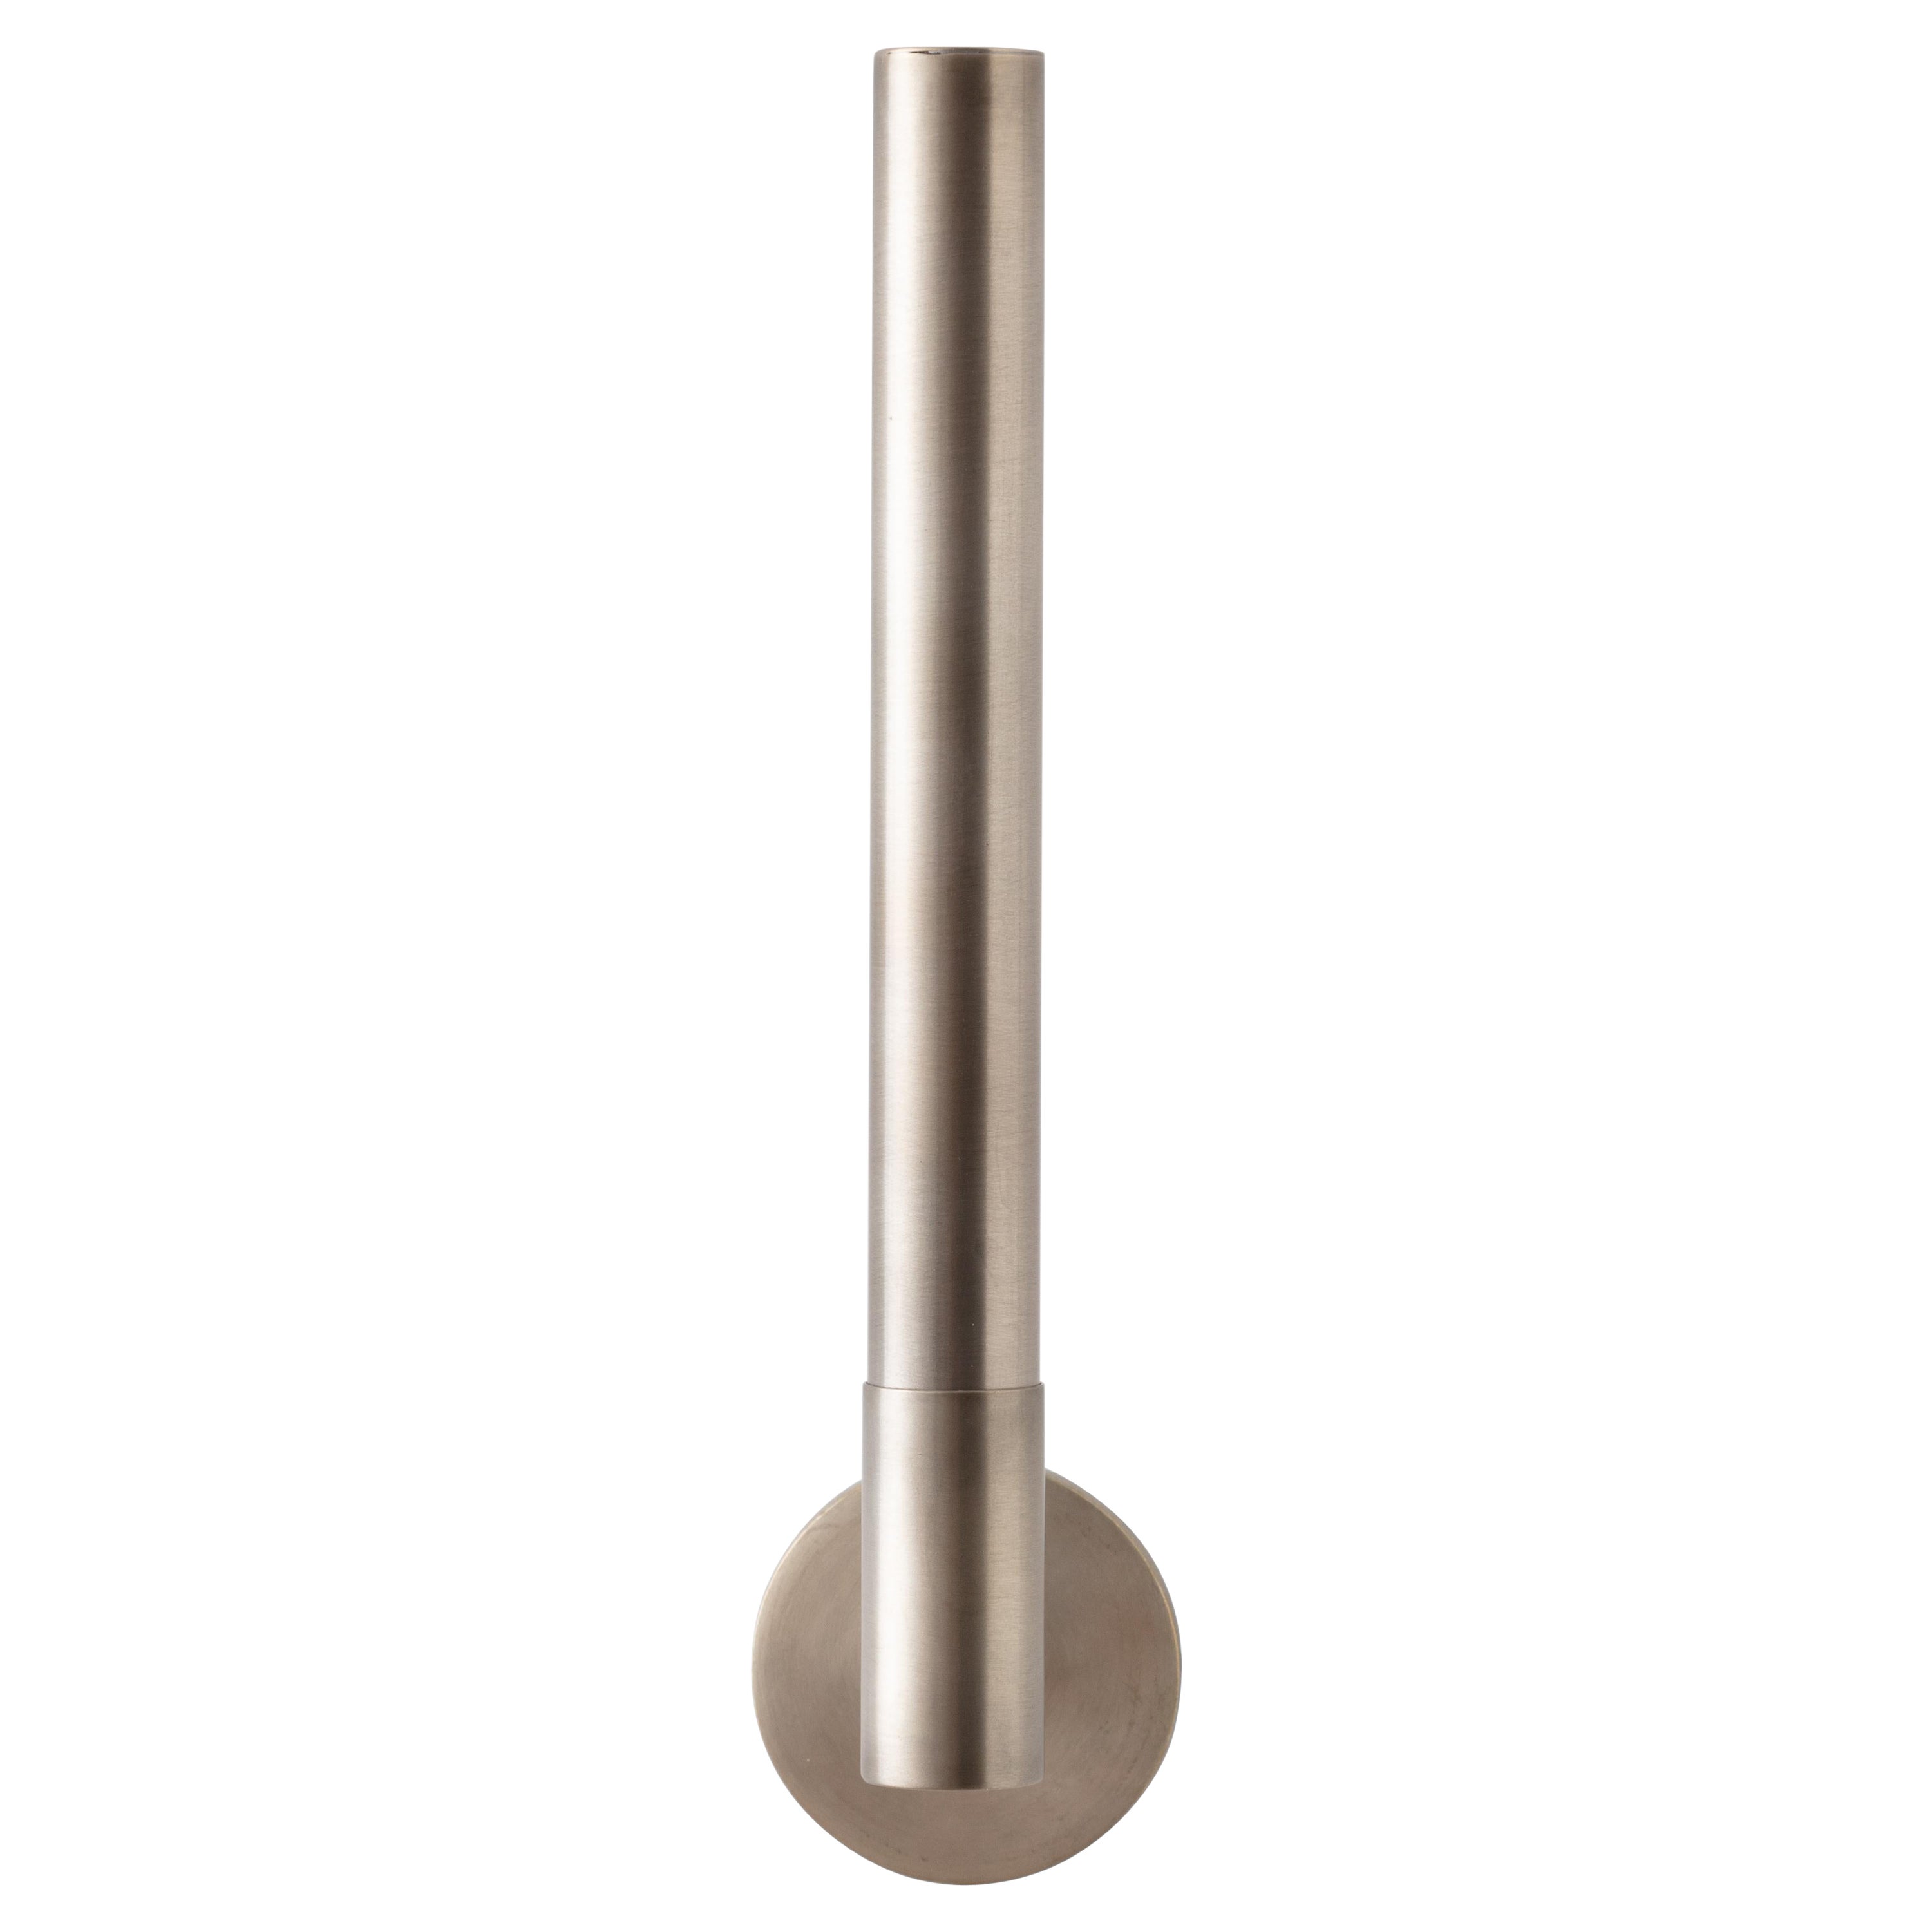 For Sale: Brown (Satin Nickel) Candelabra PinUp Picture Light Plug-in Brass Linear Sconce w/ Adjustable Light